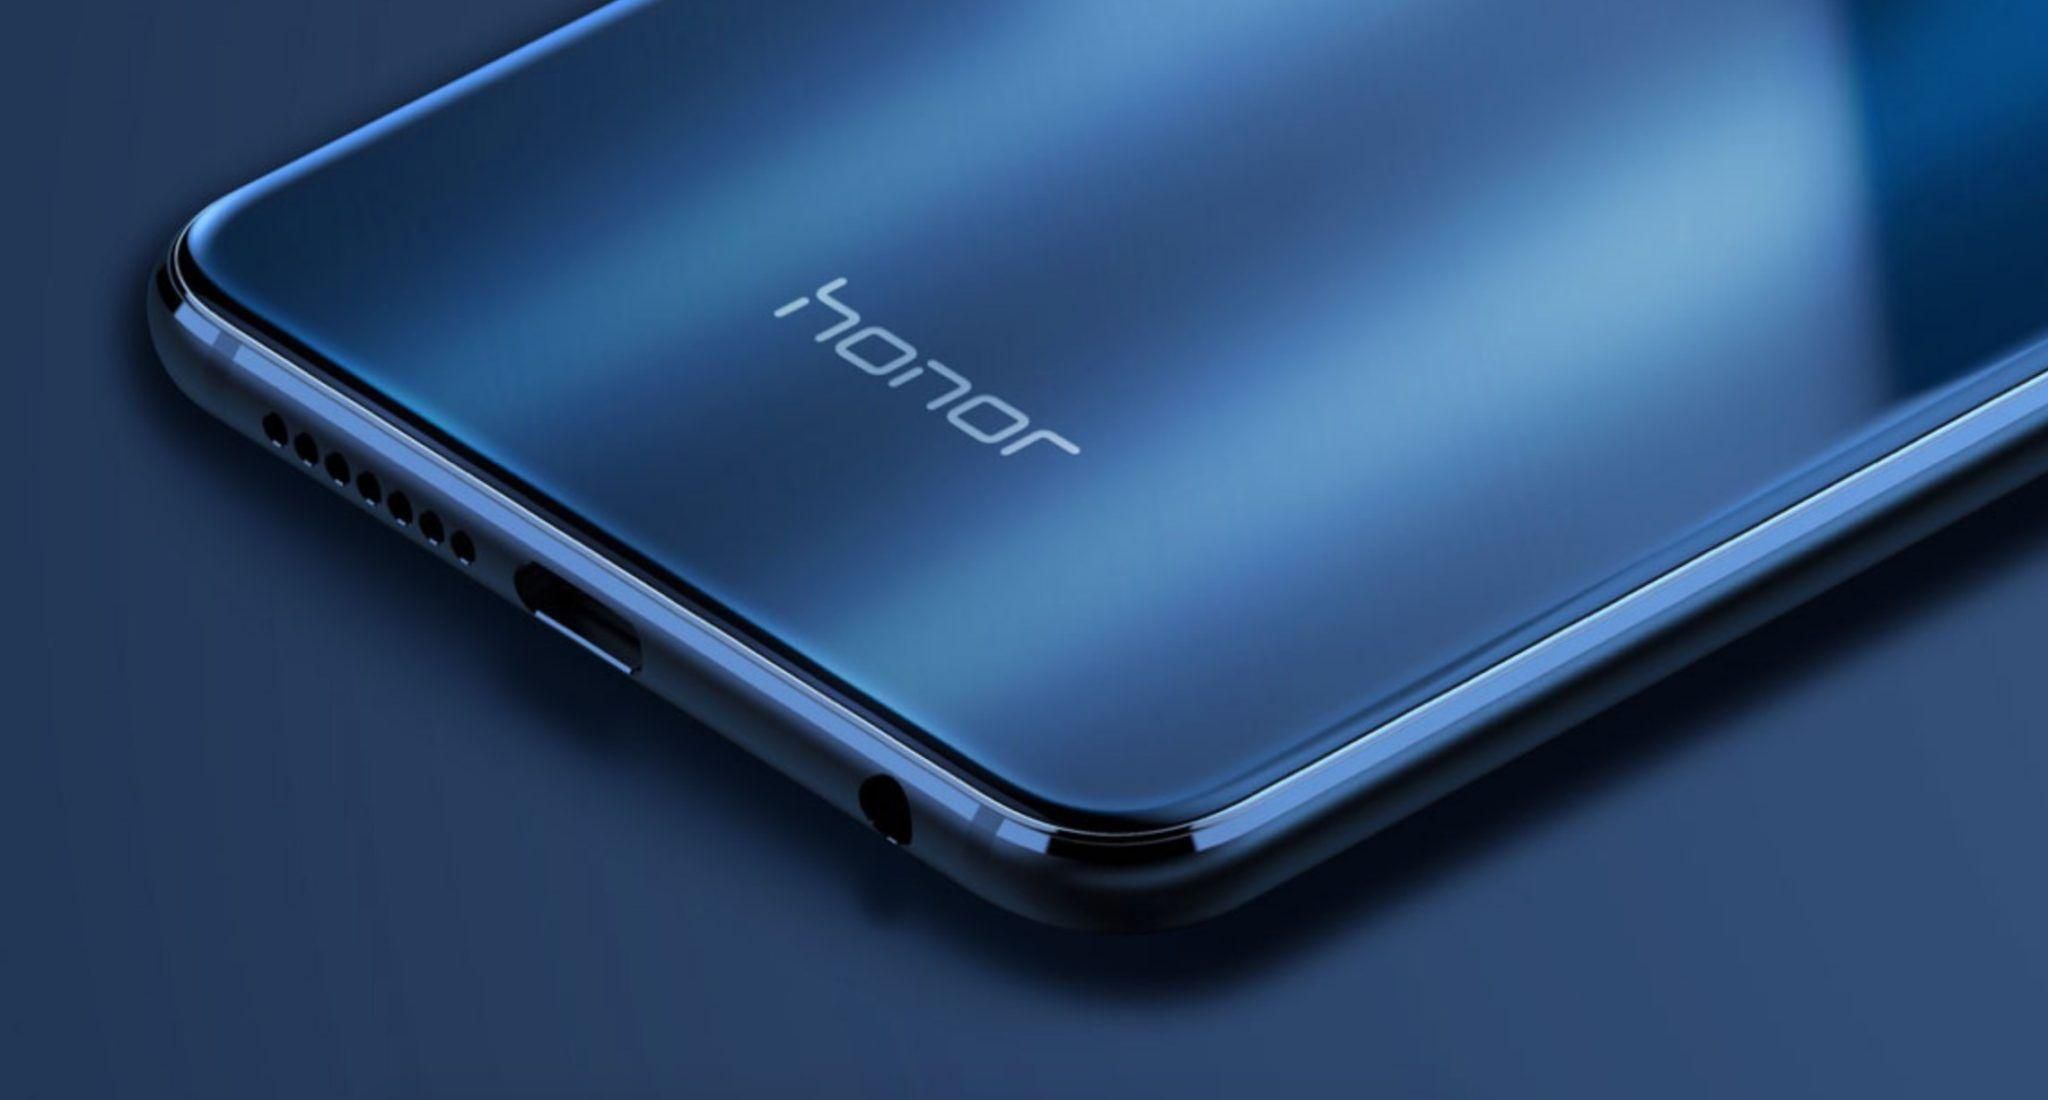 Характеристики и фото смартфона Honor 20 опубликовали в сети до анонса